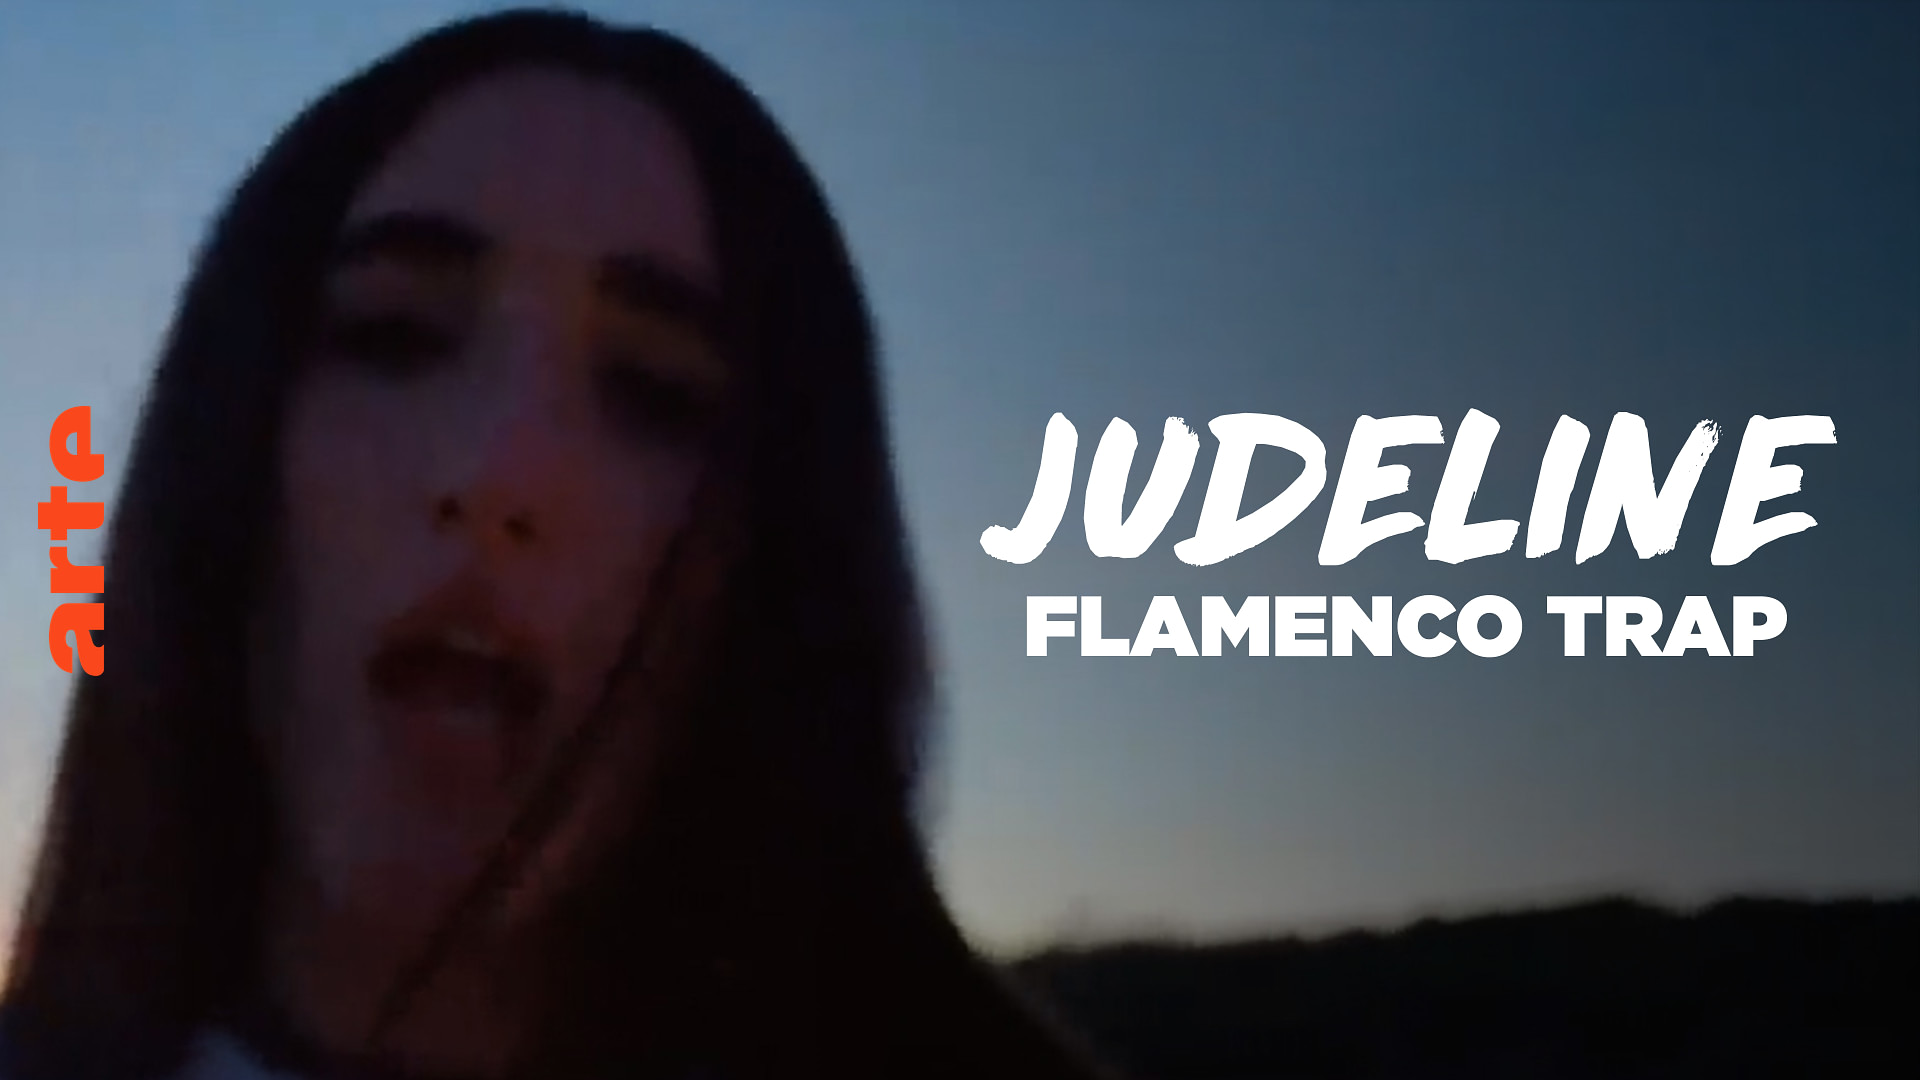 Judeline – Flamenco-Trap aus Andalusien